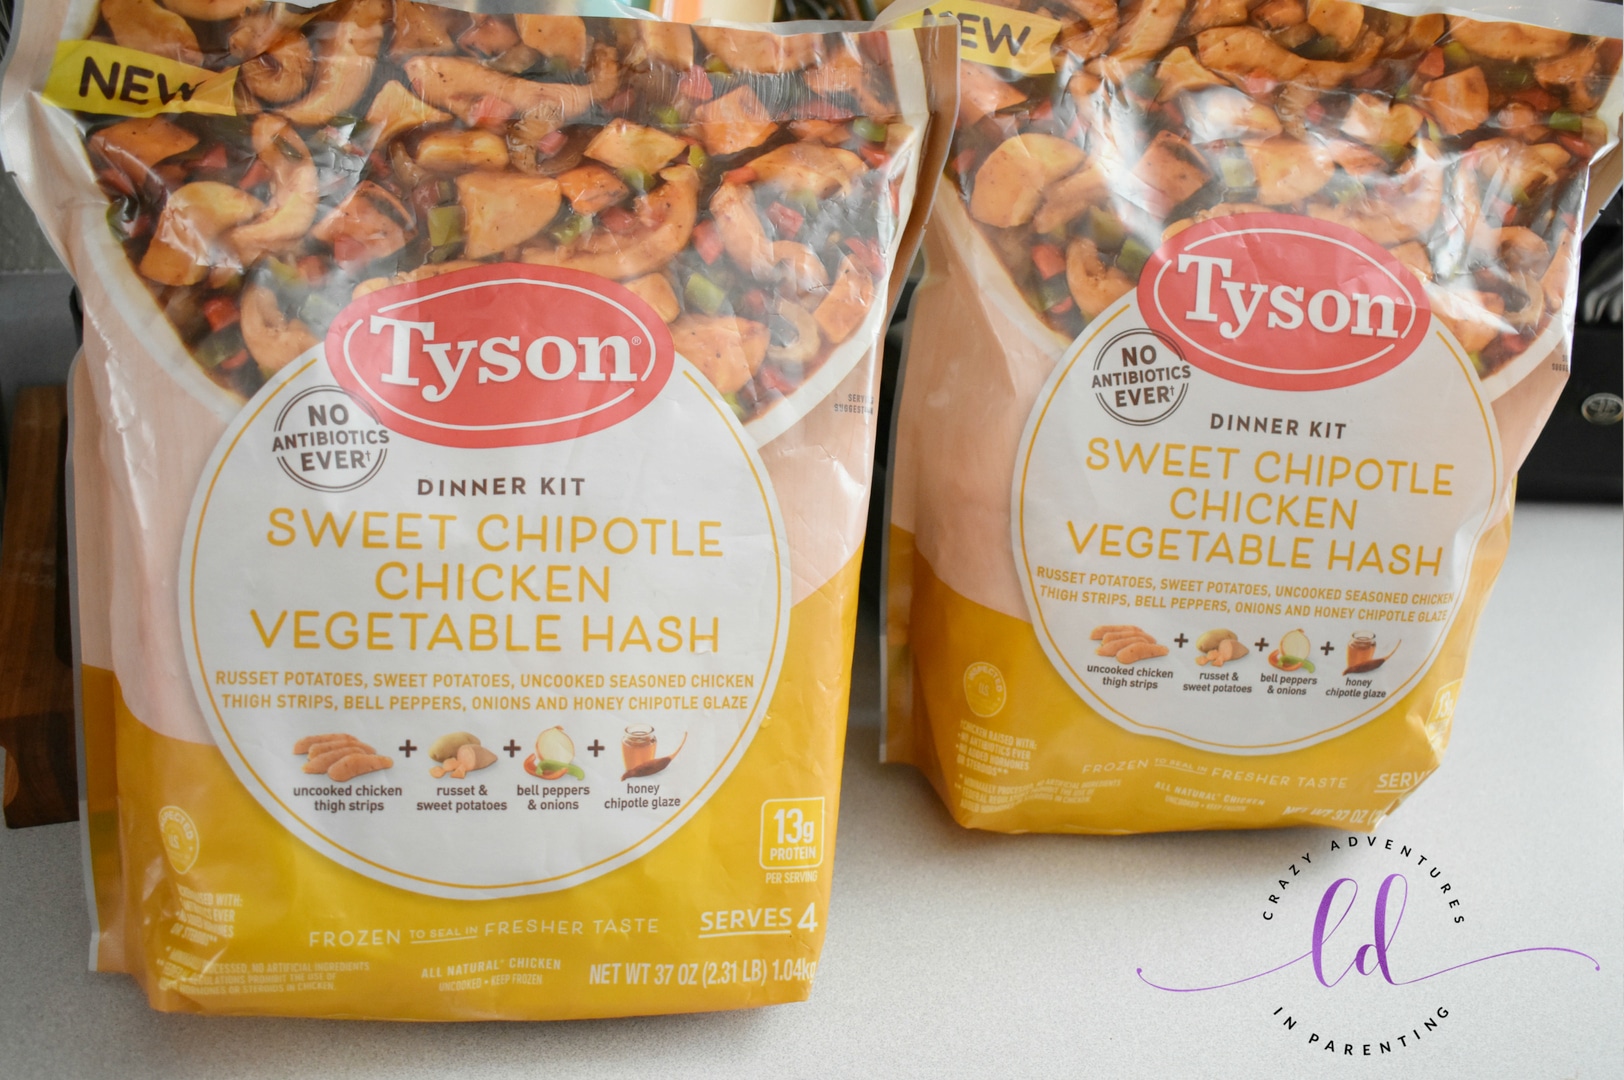 2 Tyson Sweet Chipotle Chicken & Vegetable Hash Frozen Dinner Kits